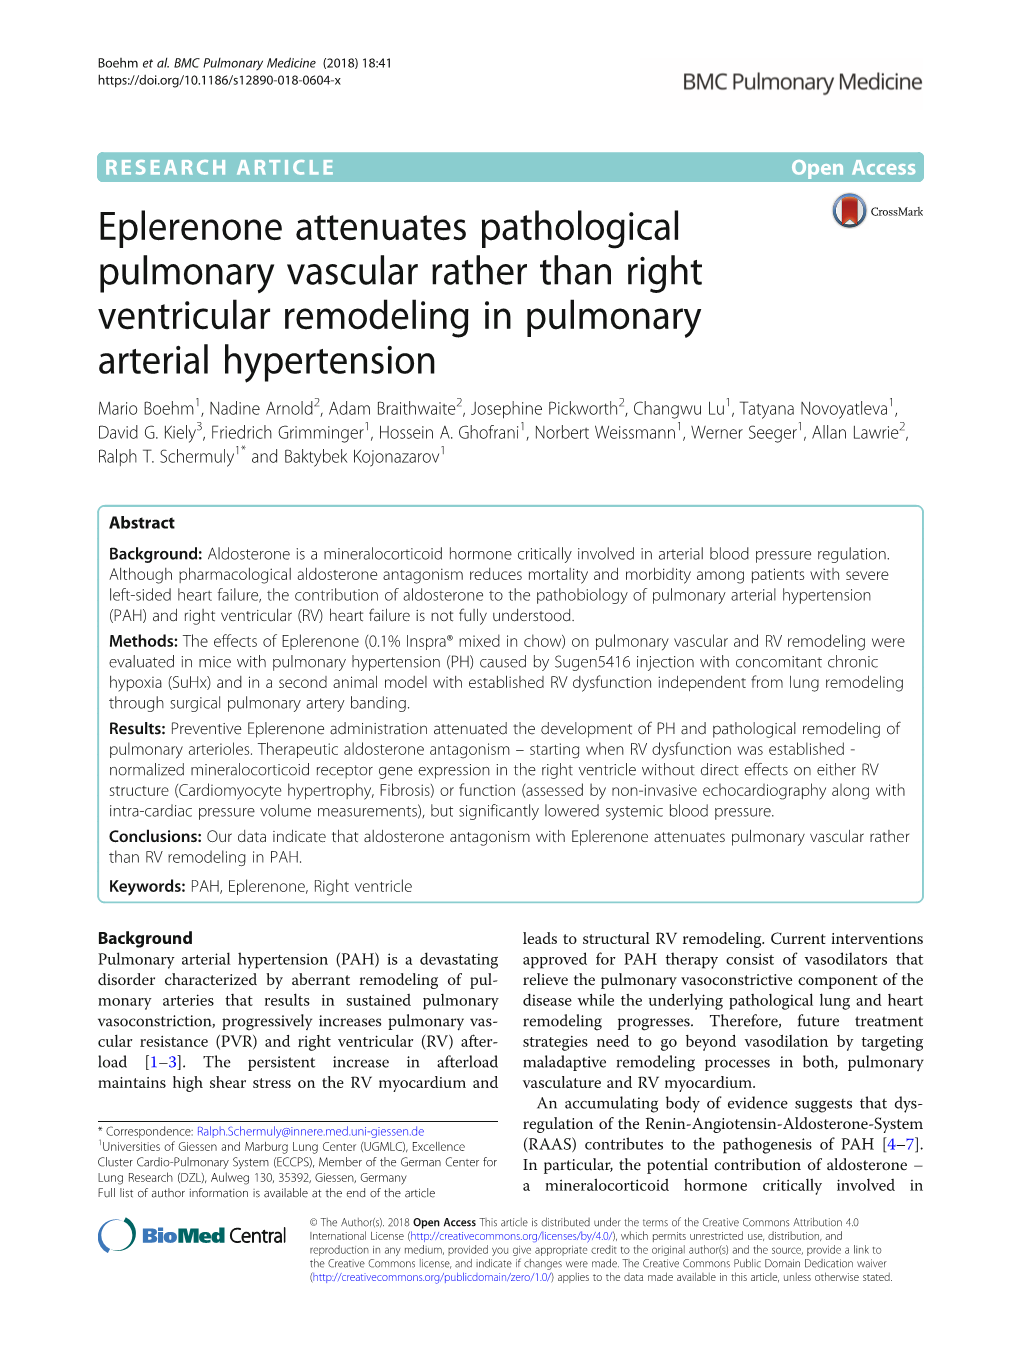 Eplerenone Attenuates Pathological Pulmonary Vascular Rather Than